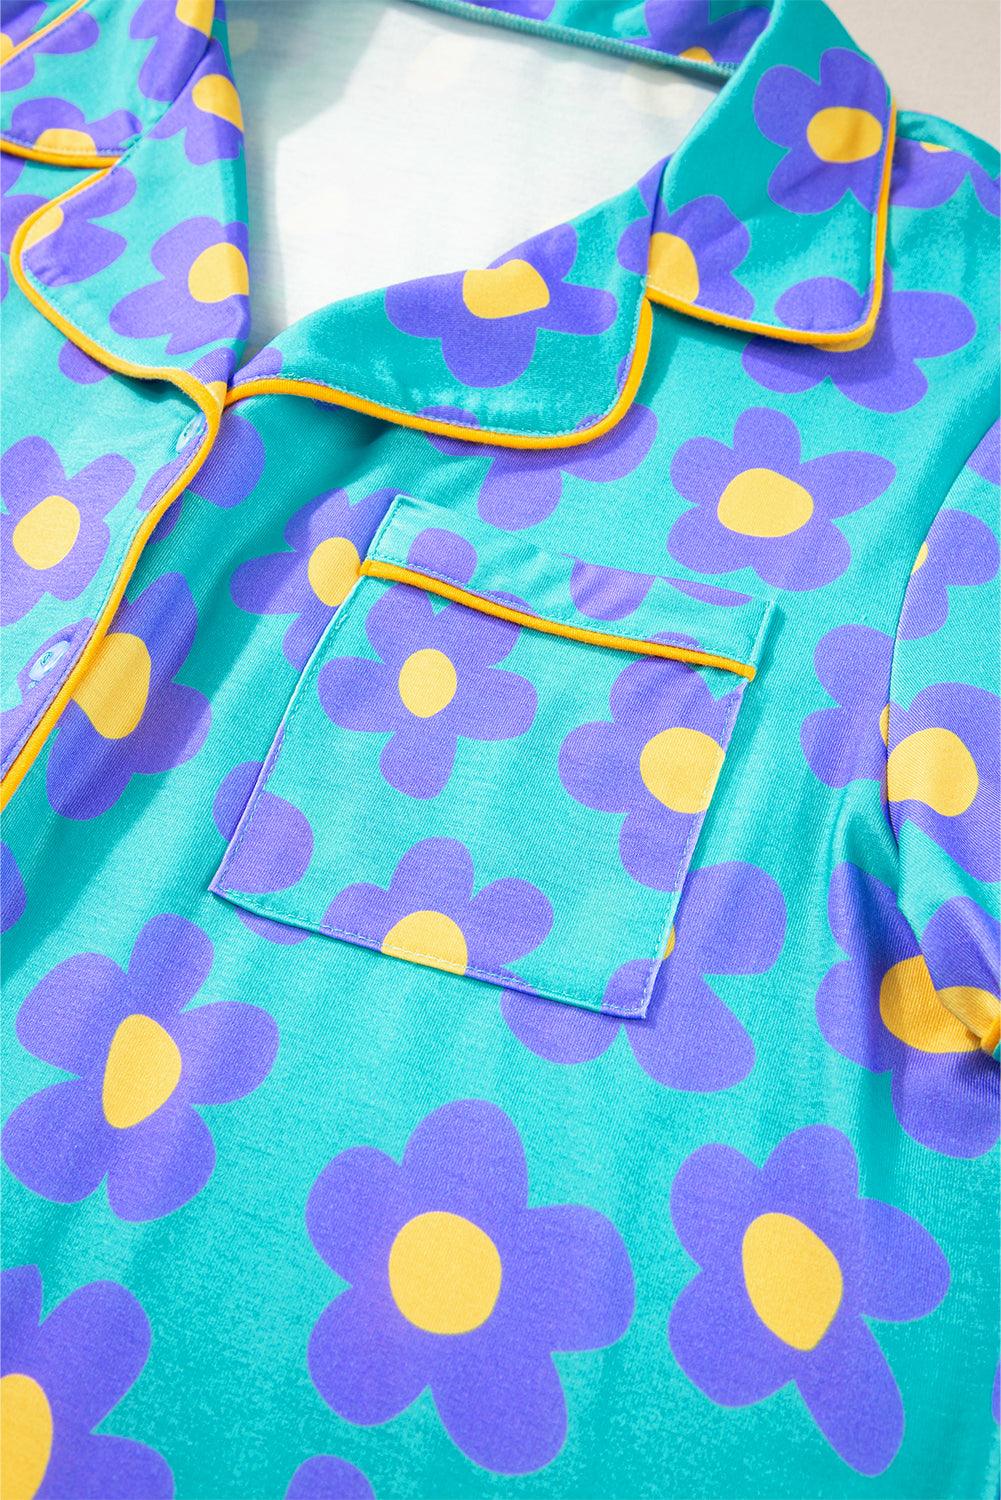 Green Flower Print Short Sleeve Shirt Pajamas Set - L & M Kee, LLC